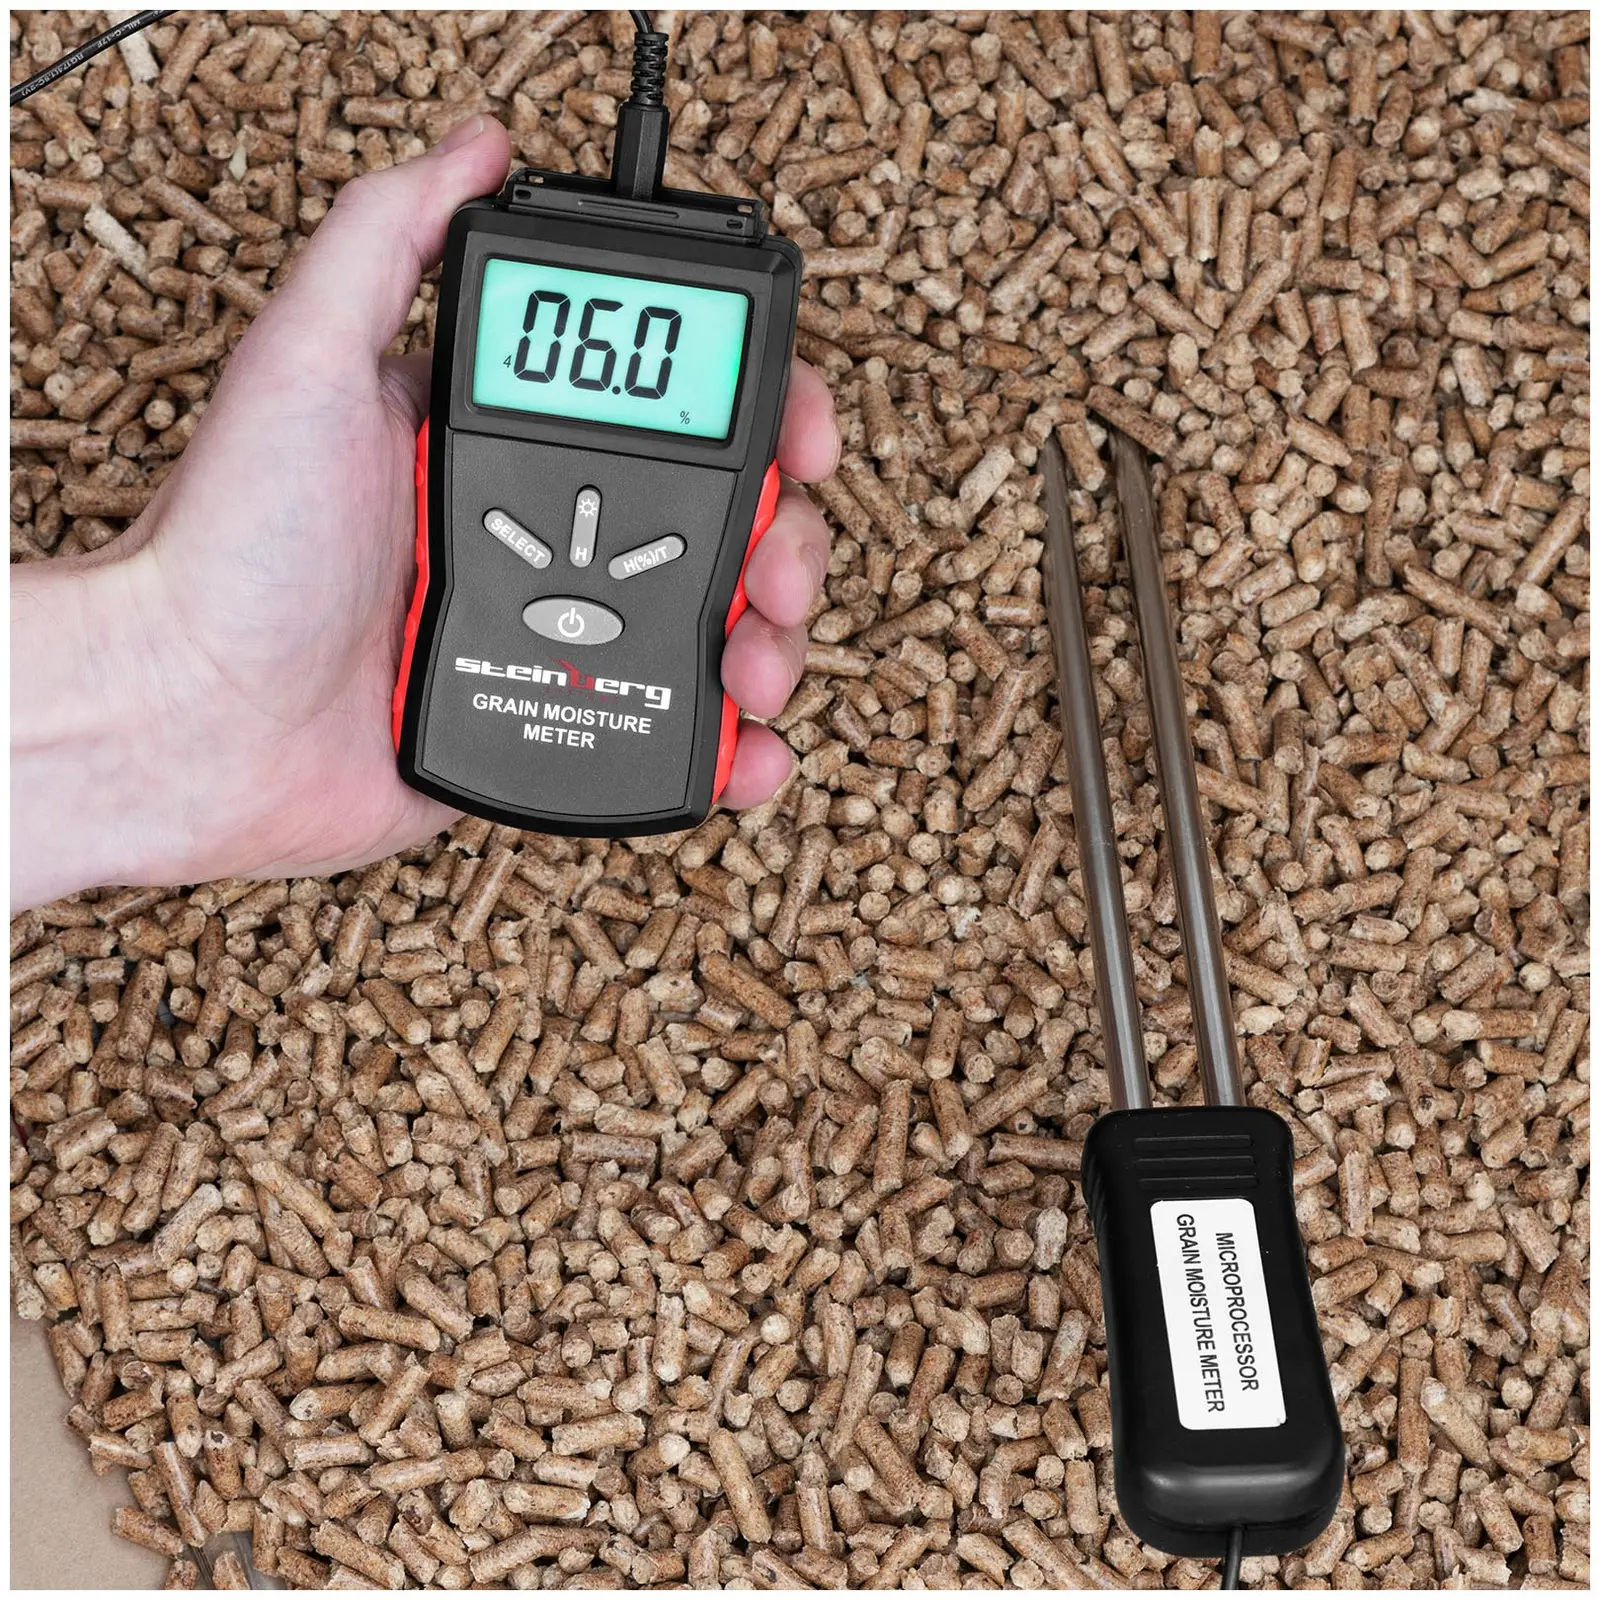 Factory second Grain Moisture Meter